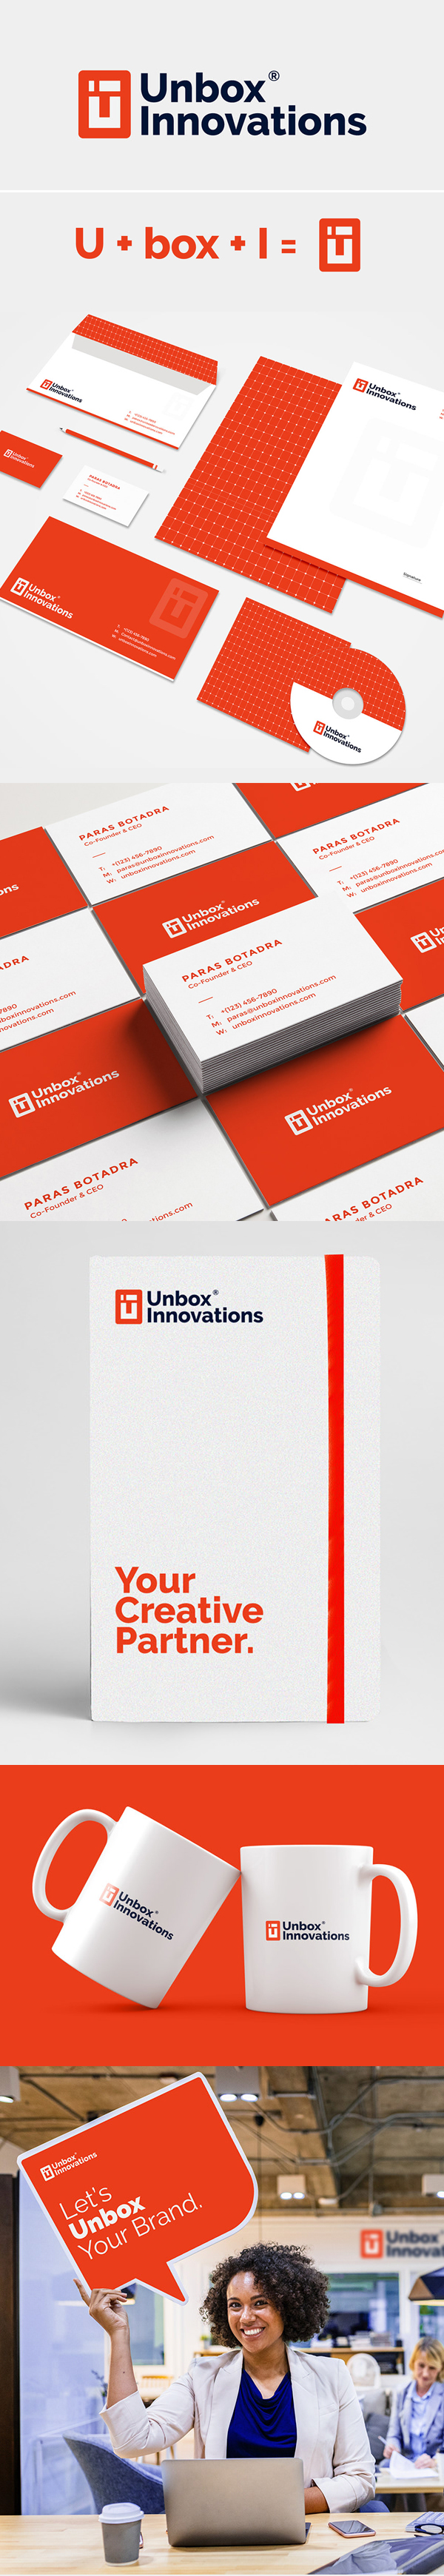 Branding: Unbox Innovations Logo design and Branding by Kanhaiya Sharma